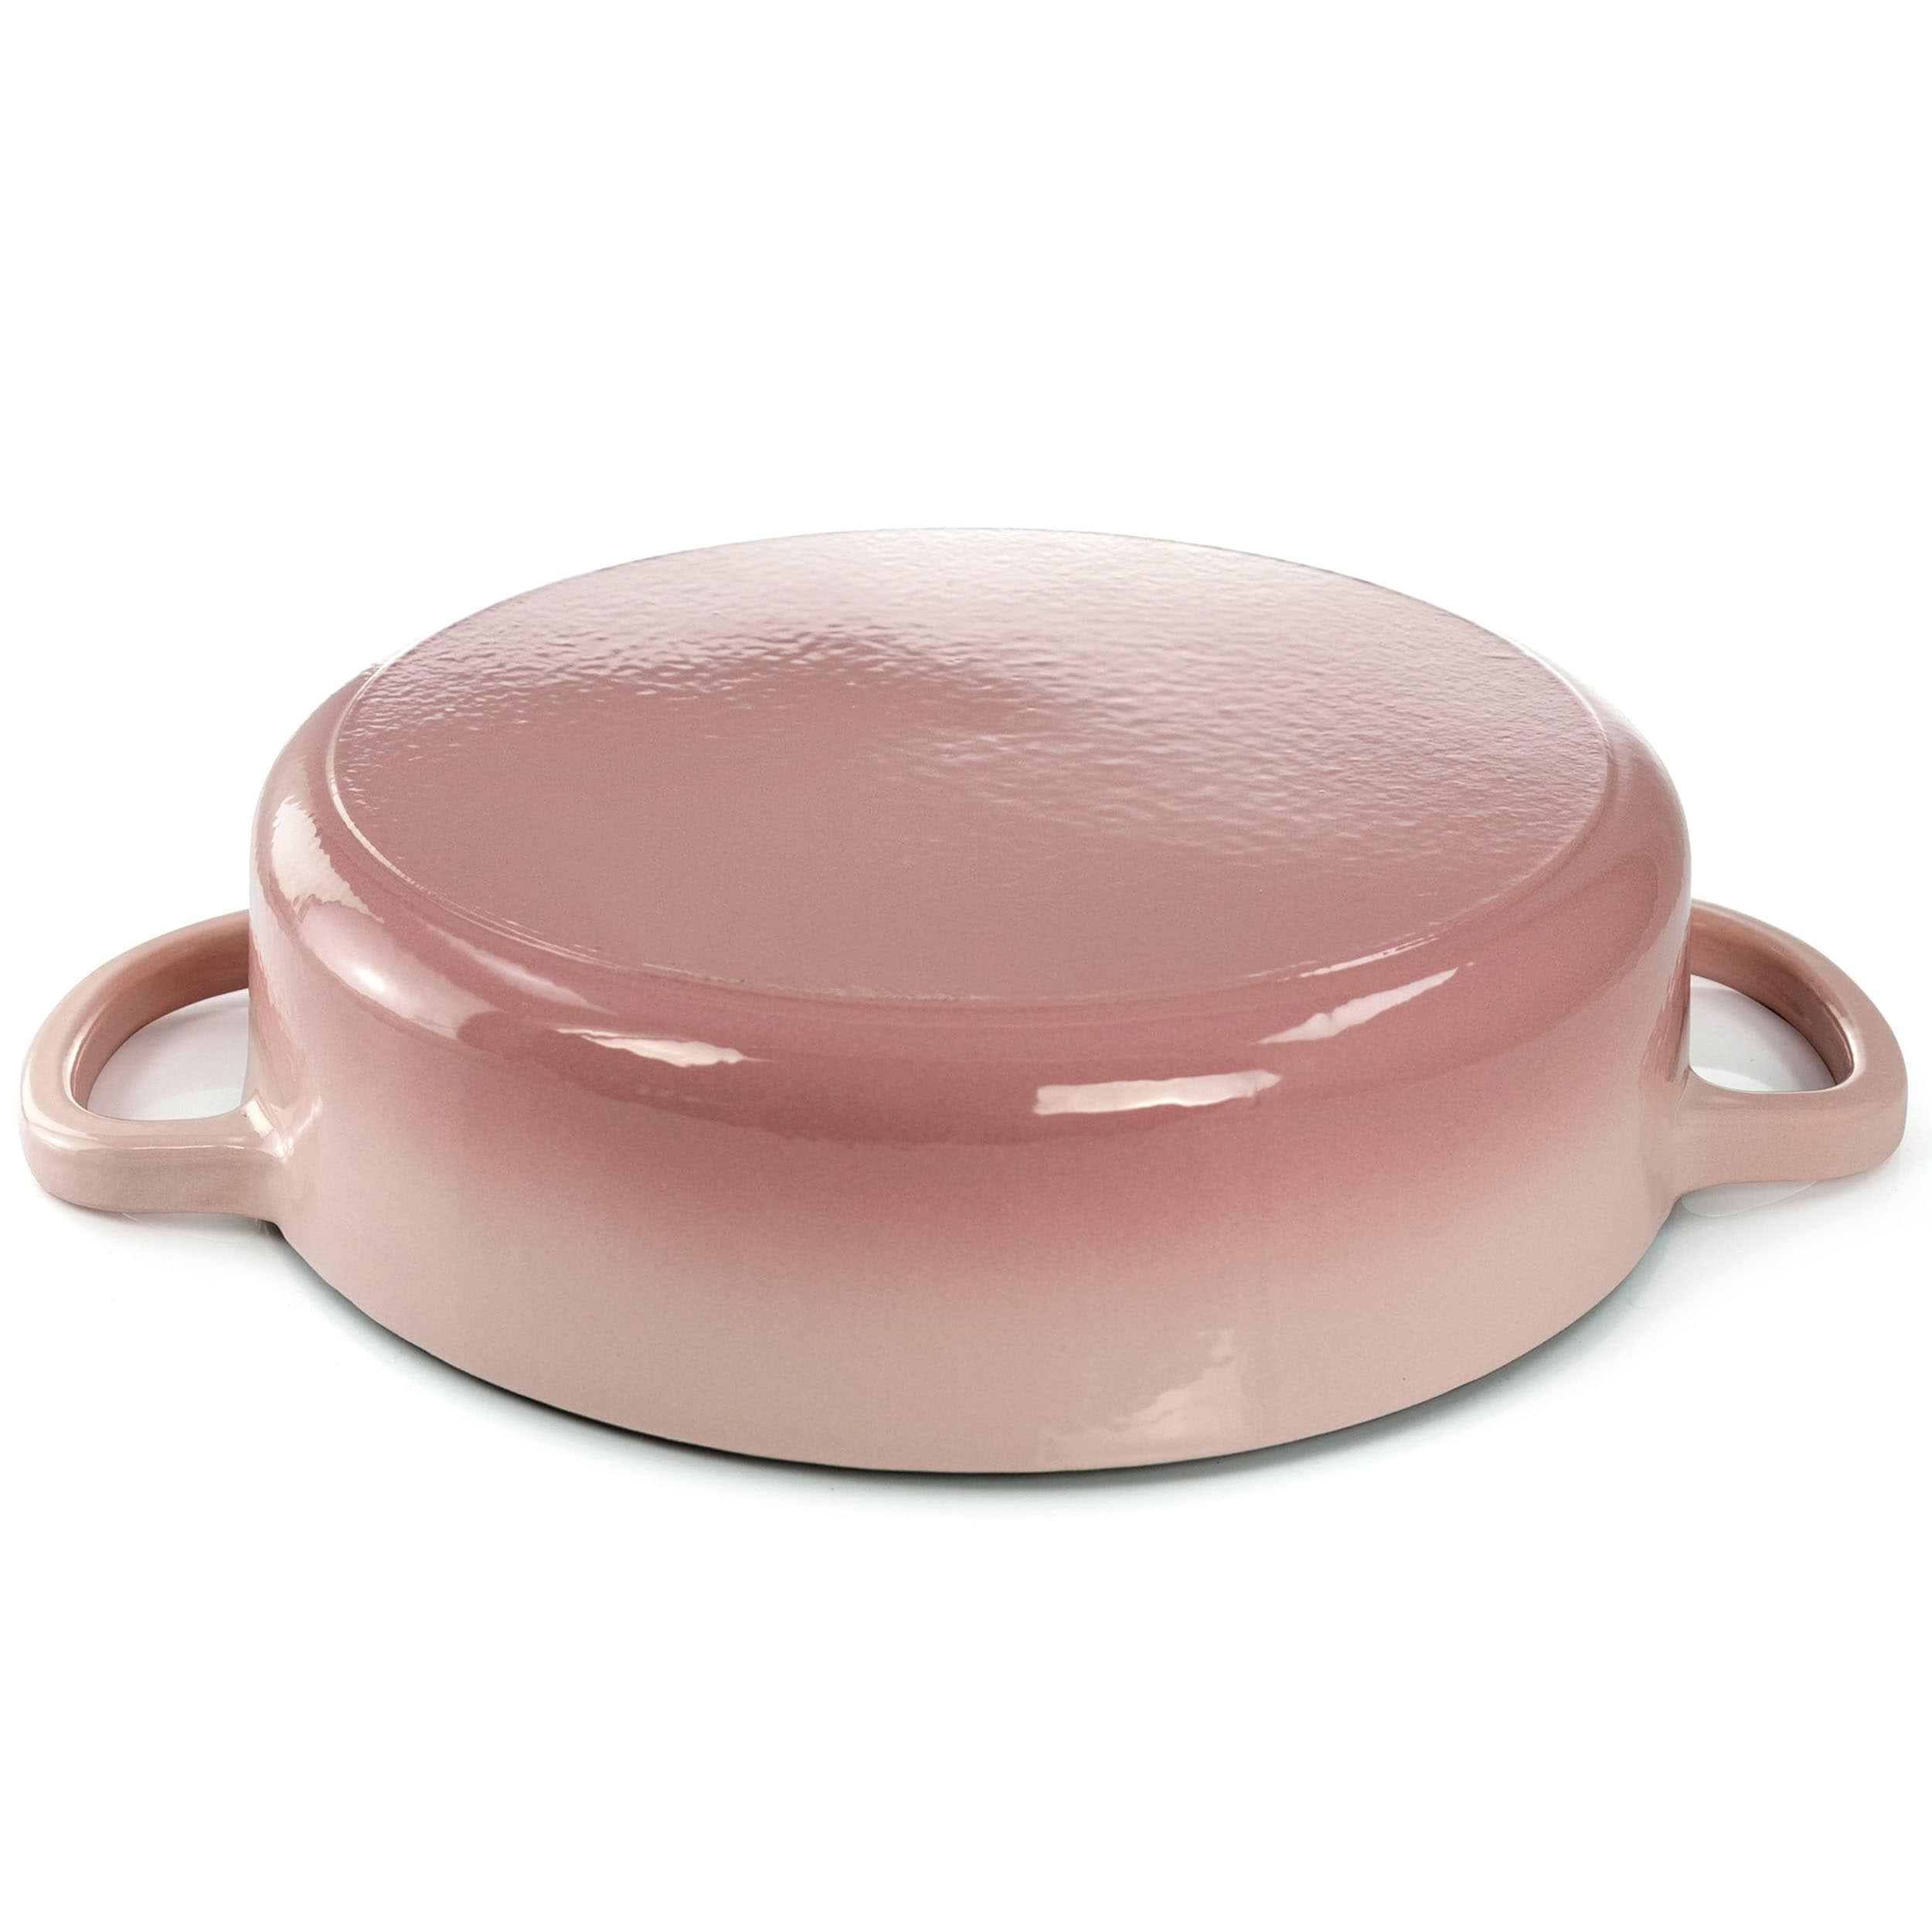 Crock Pot Artisan 5Qt Enameled Cast Iron Braiser Pan in Blush Pink